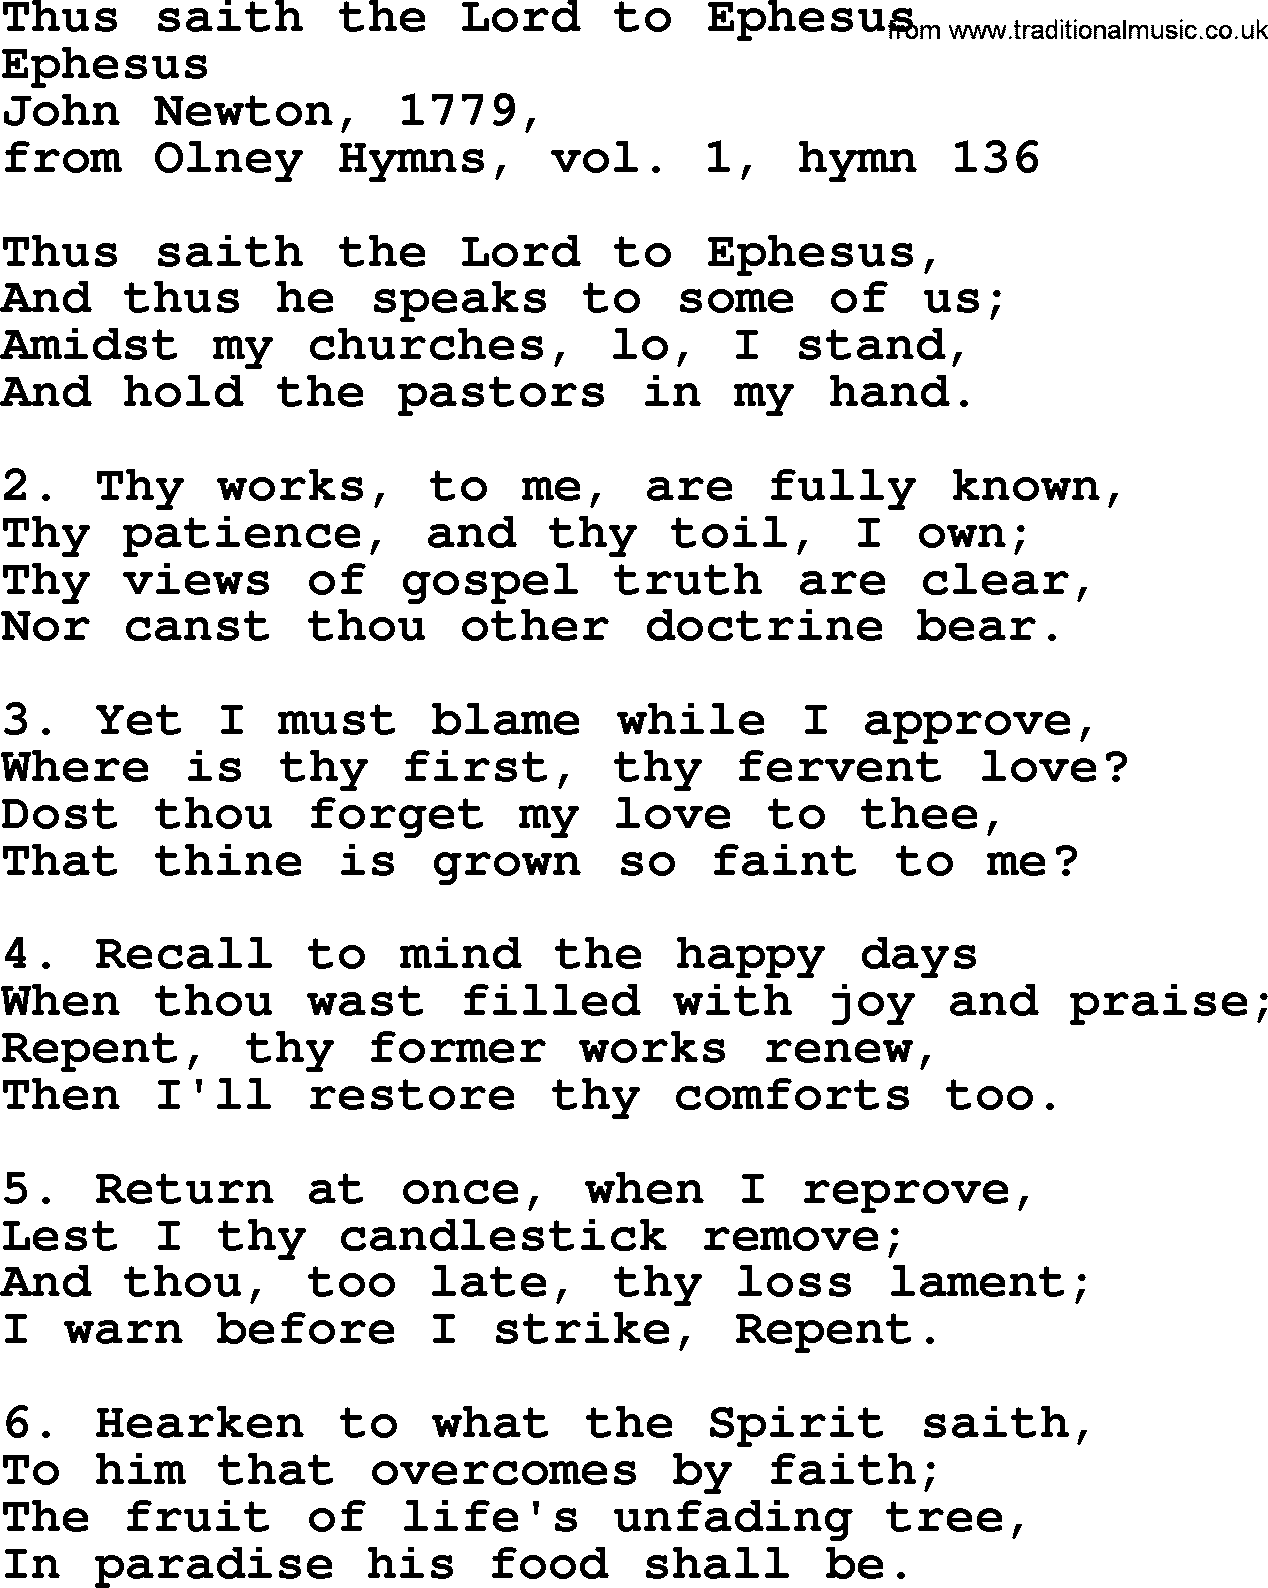 John Newton hymn: Thus Saith The Lord To Ephesus, lyrics